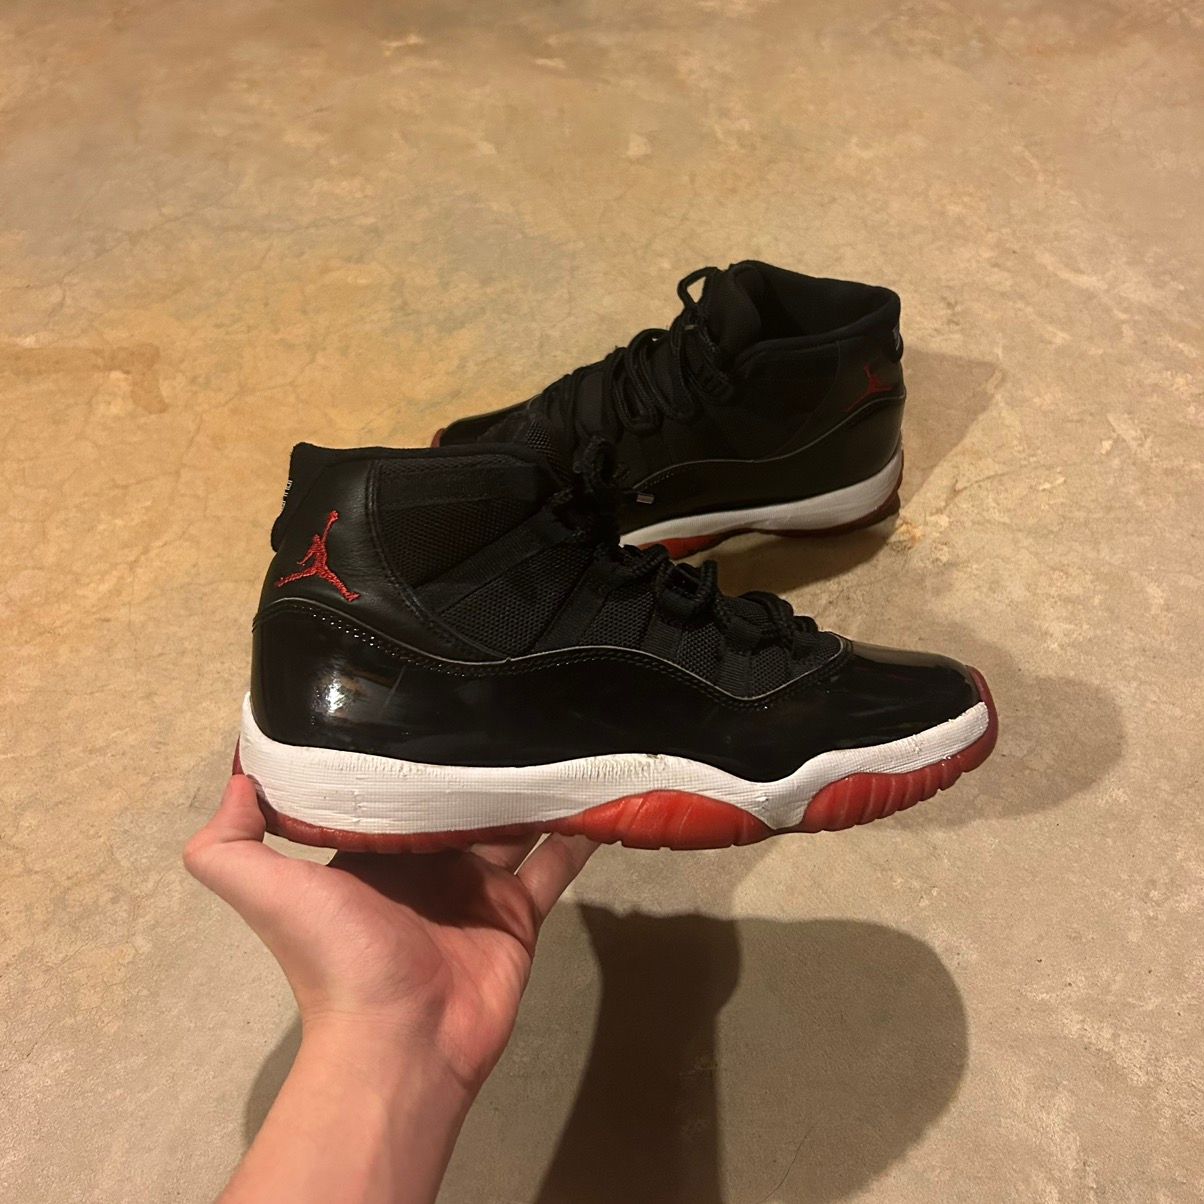 Pre-owned Jordan Nike Jordan 11 Retro Playoffs Bred 2019 Us 8.5 Shoes In Black